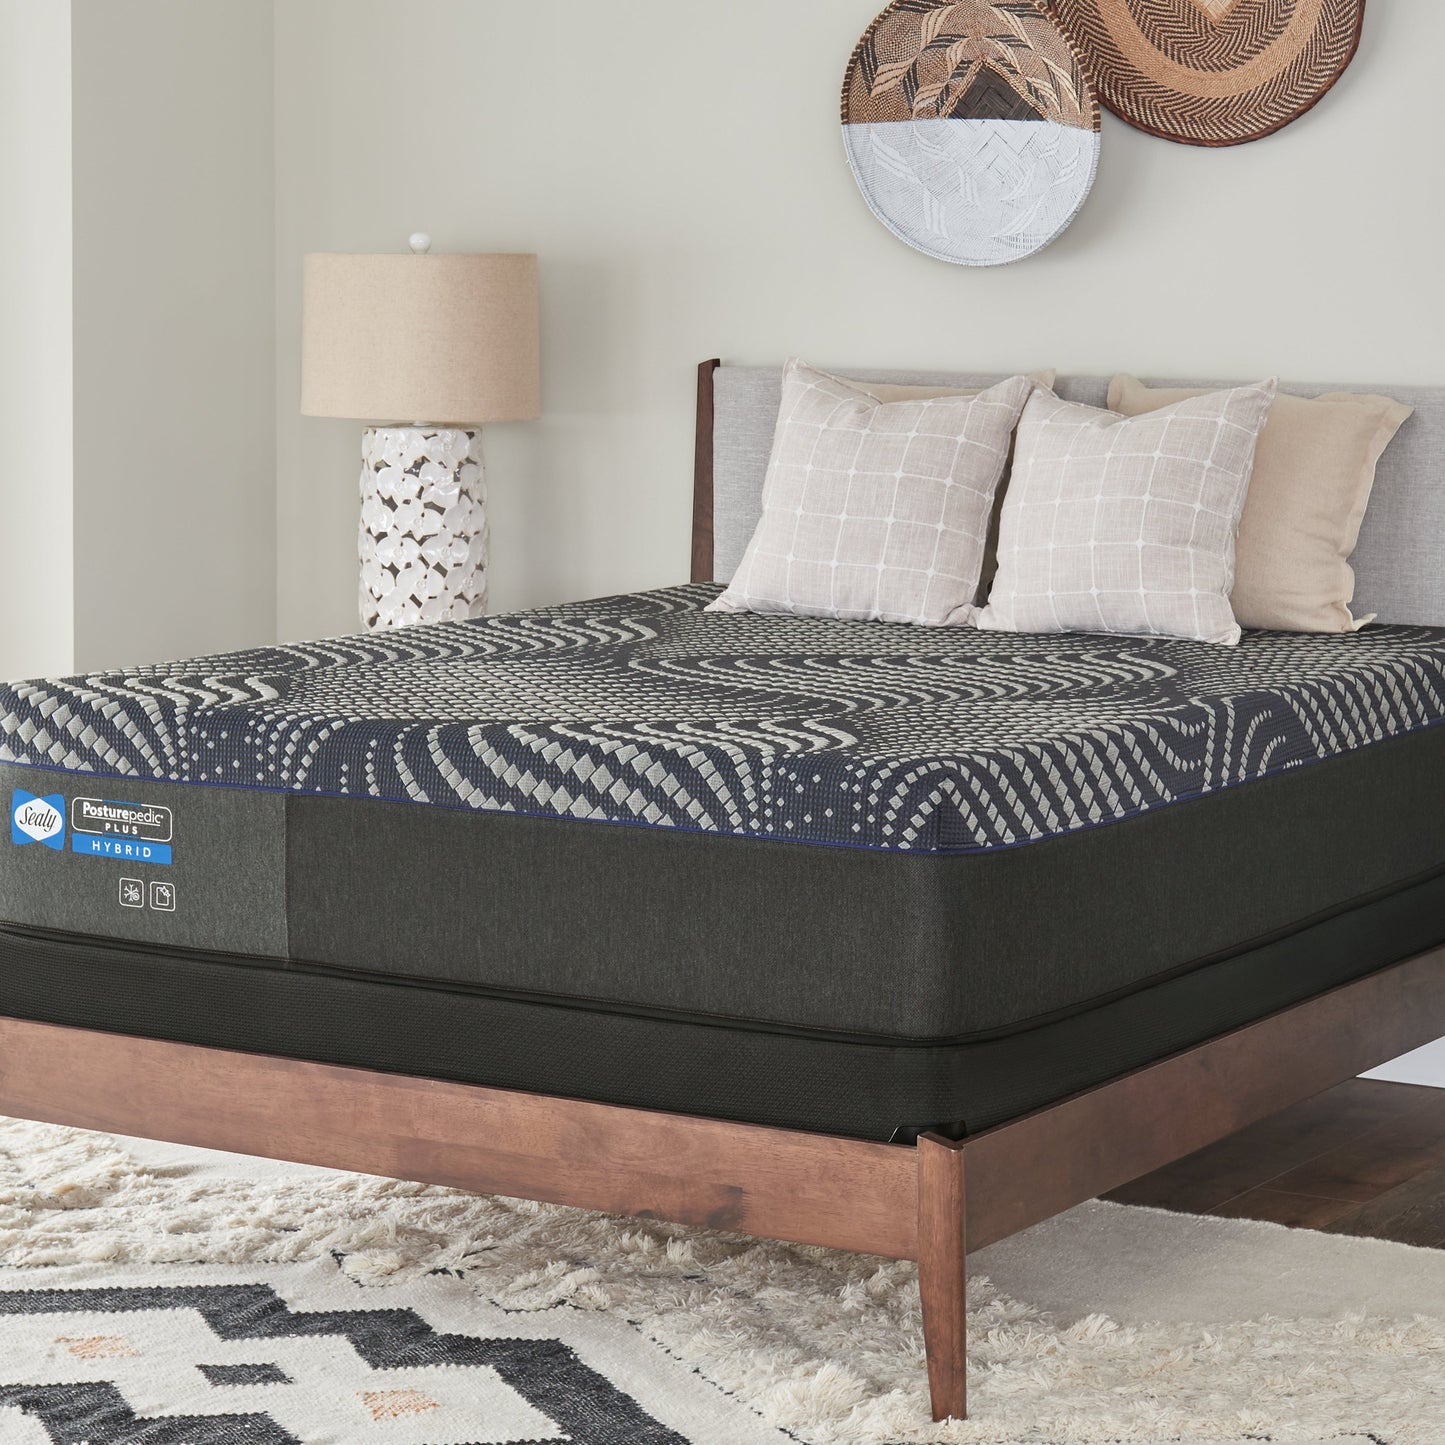 Sealy Albany Medium Hybrid Mattress On Bed Frame In Bedroom